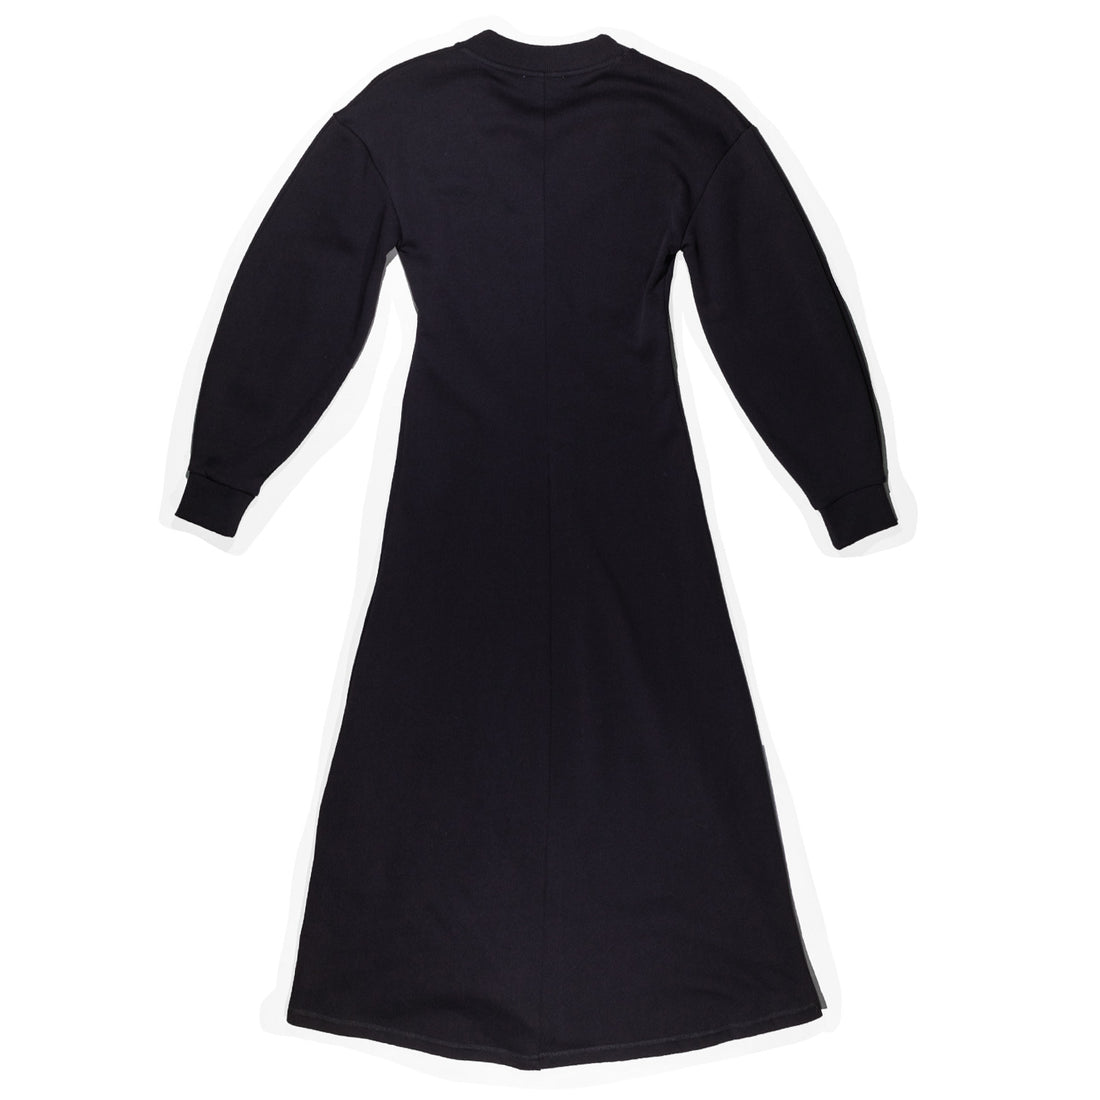 Rodebjer Giseba Dress in Black